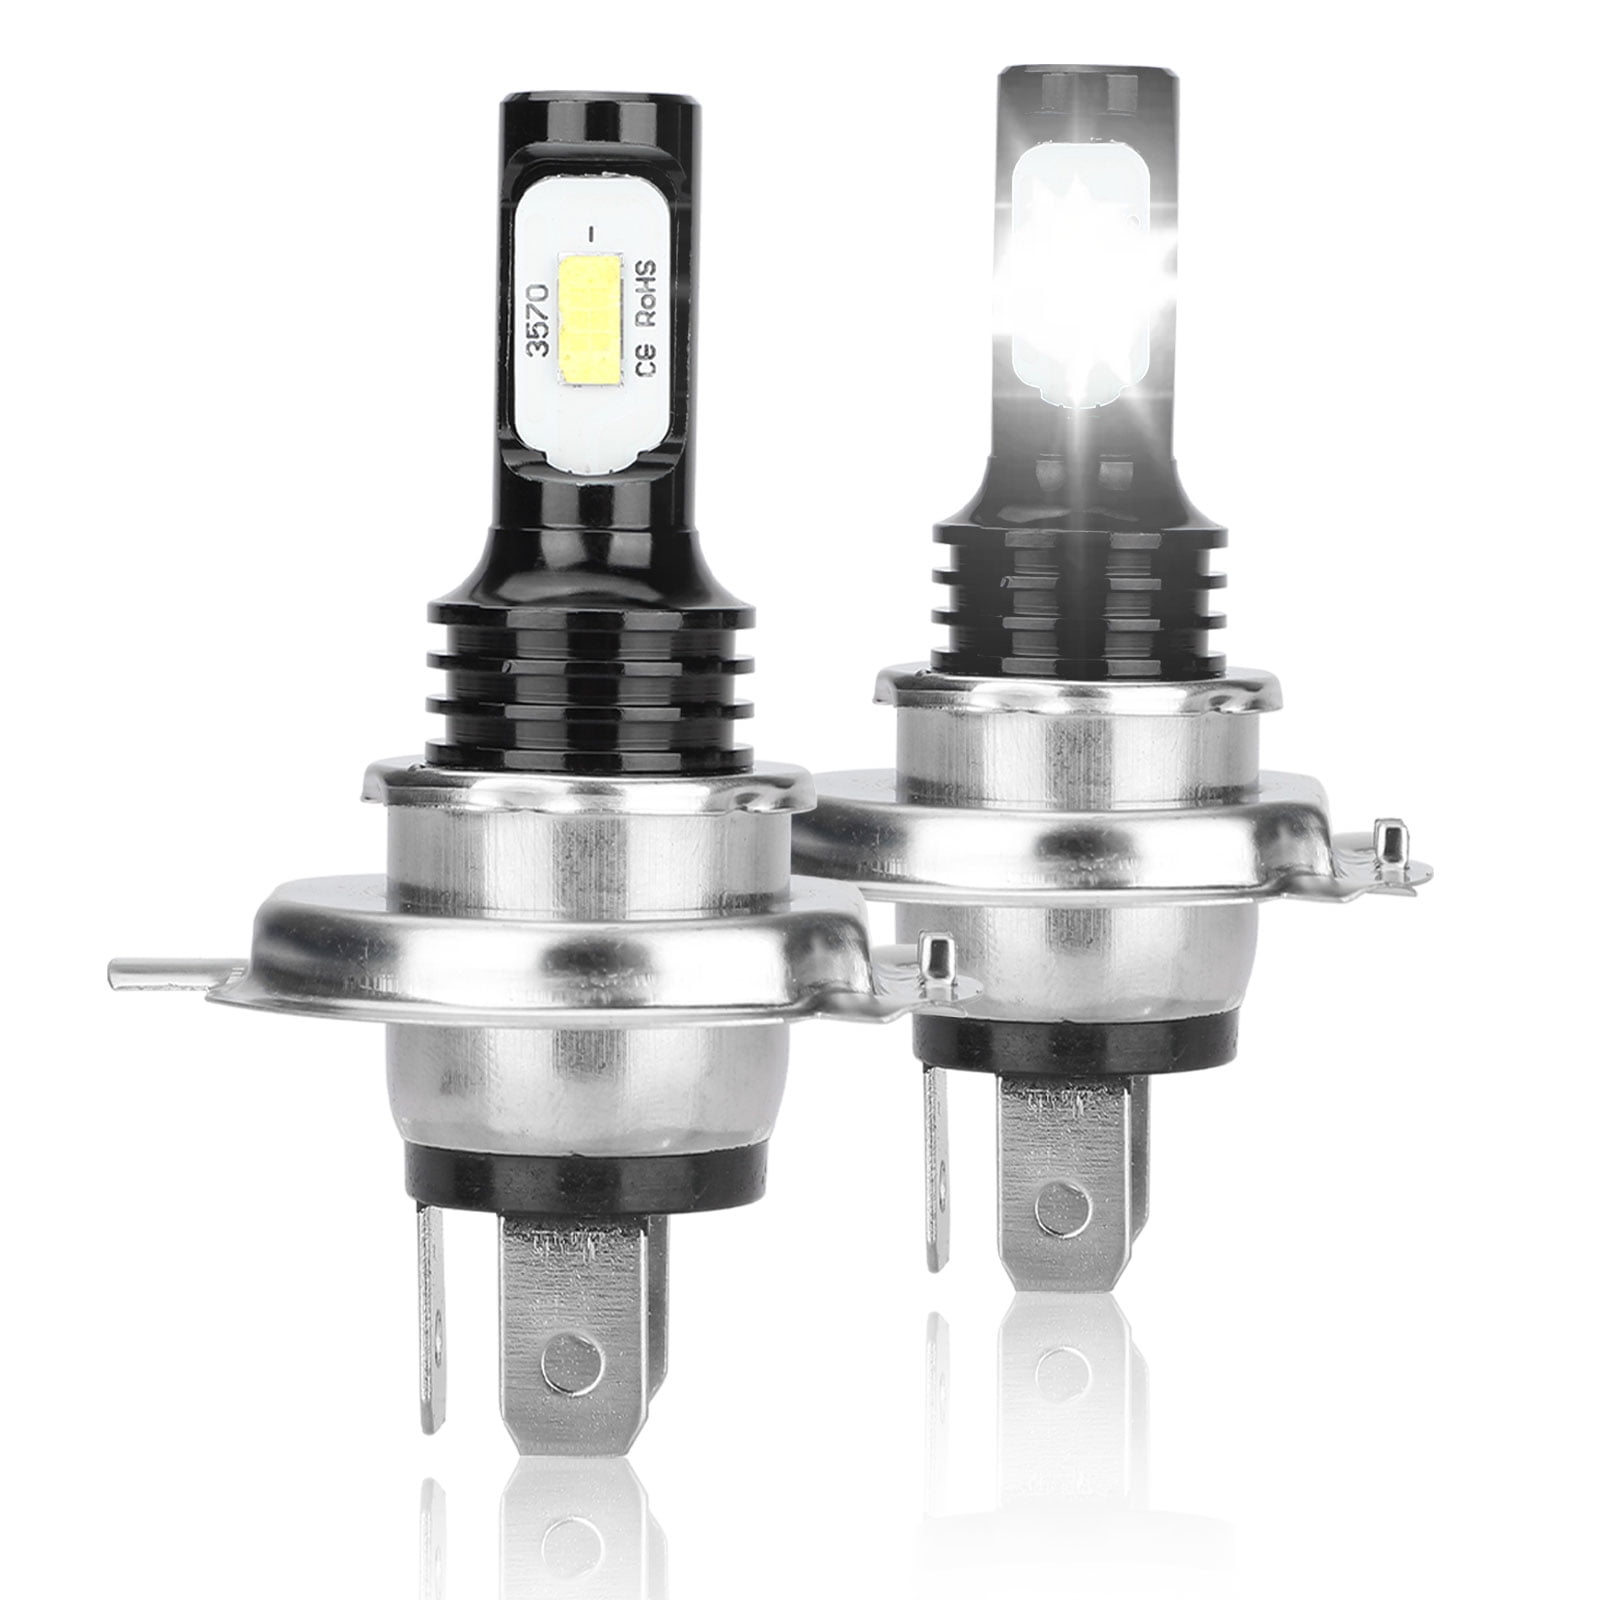 2Pcs Vehicle Auto Car Halogen Lamps Lights H4 Super White Light Bulbs 100W 12V 